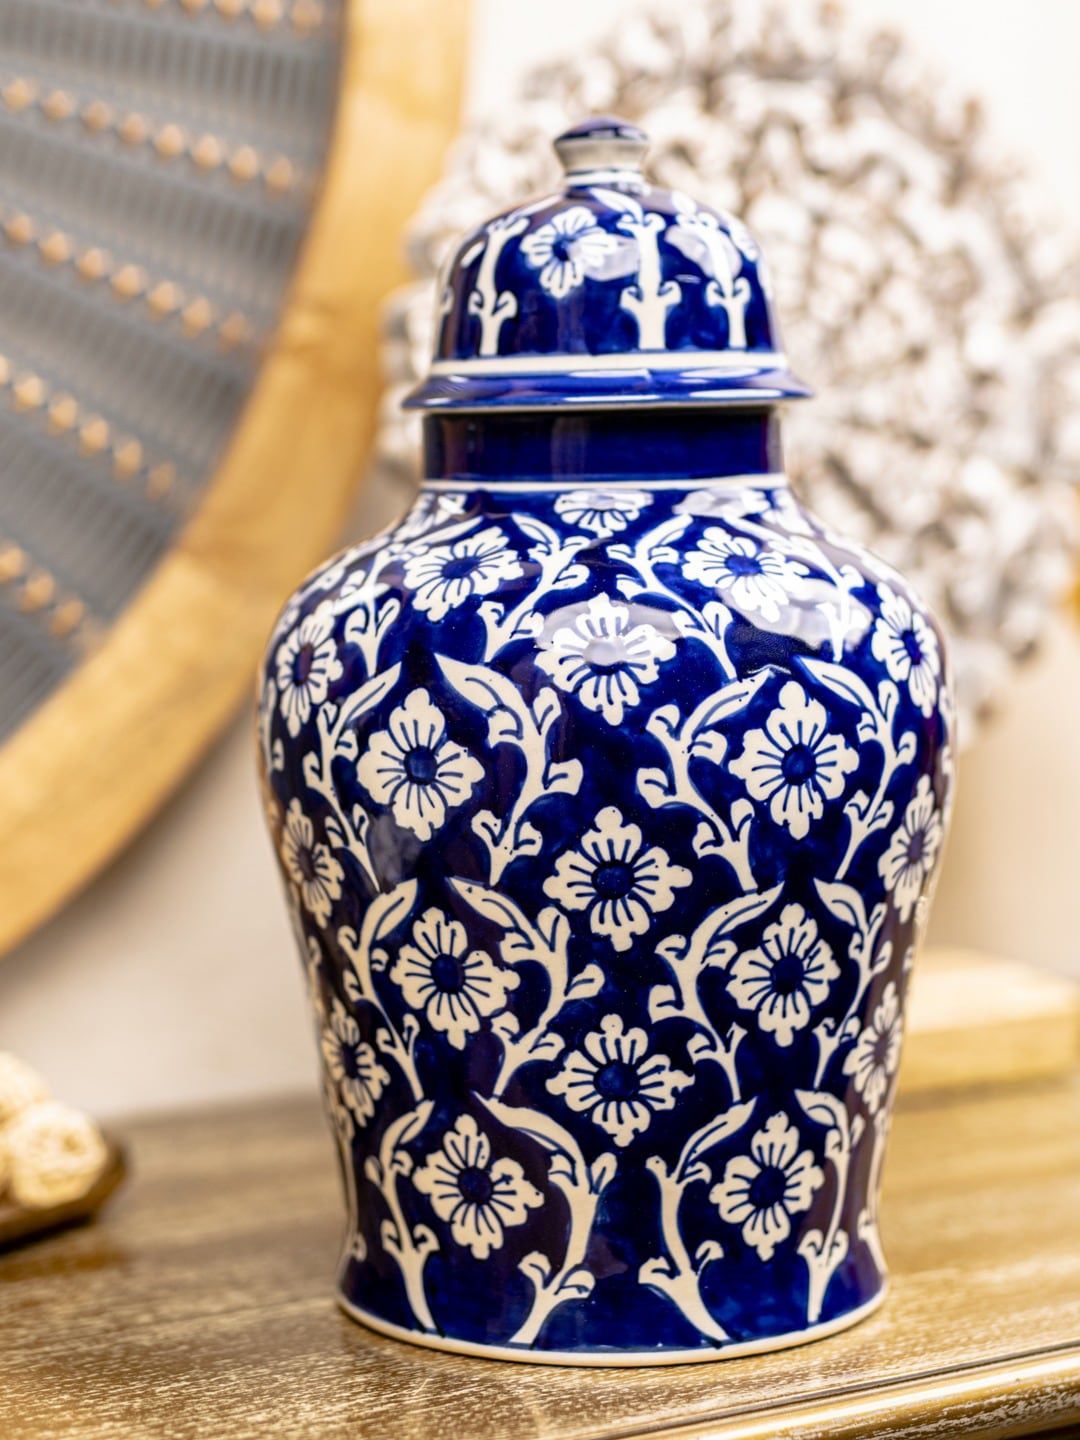 The 7 DeKor Blue & White Printed Mughal Decorative Jar Showpiece Price in India